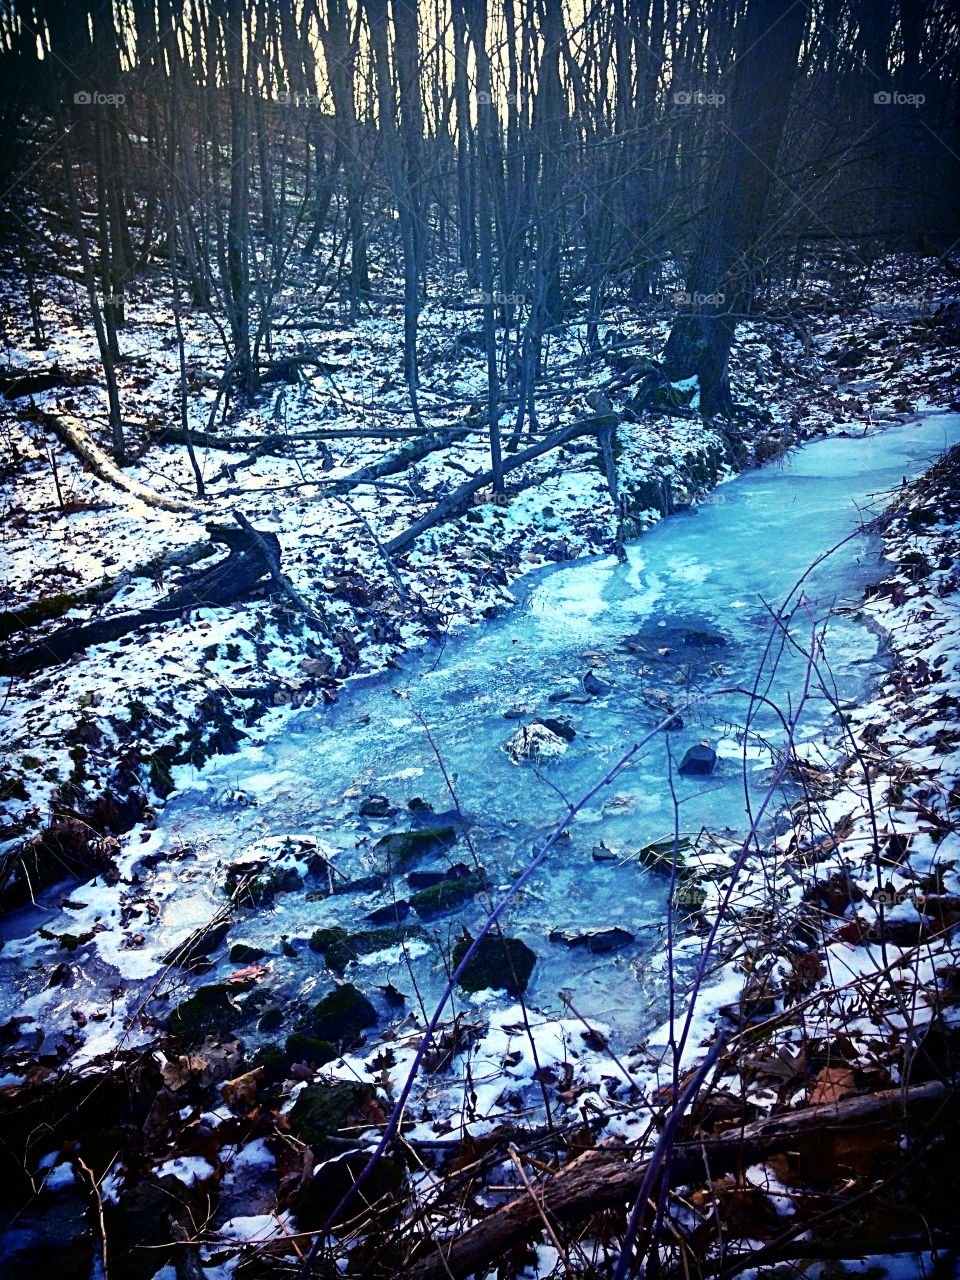 Winter mountain run ❄️. Taken in the PA sticks 